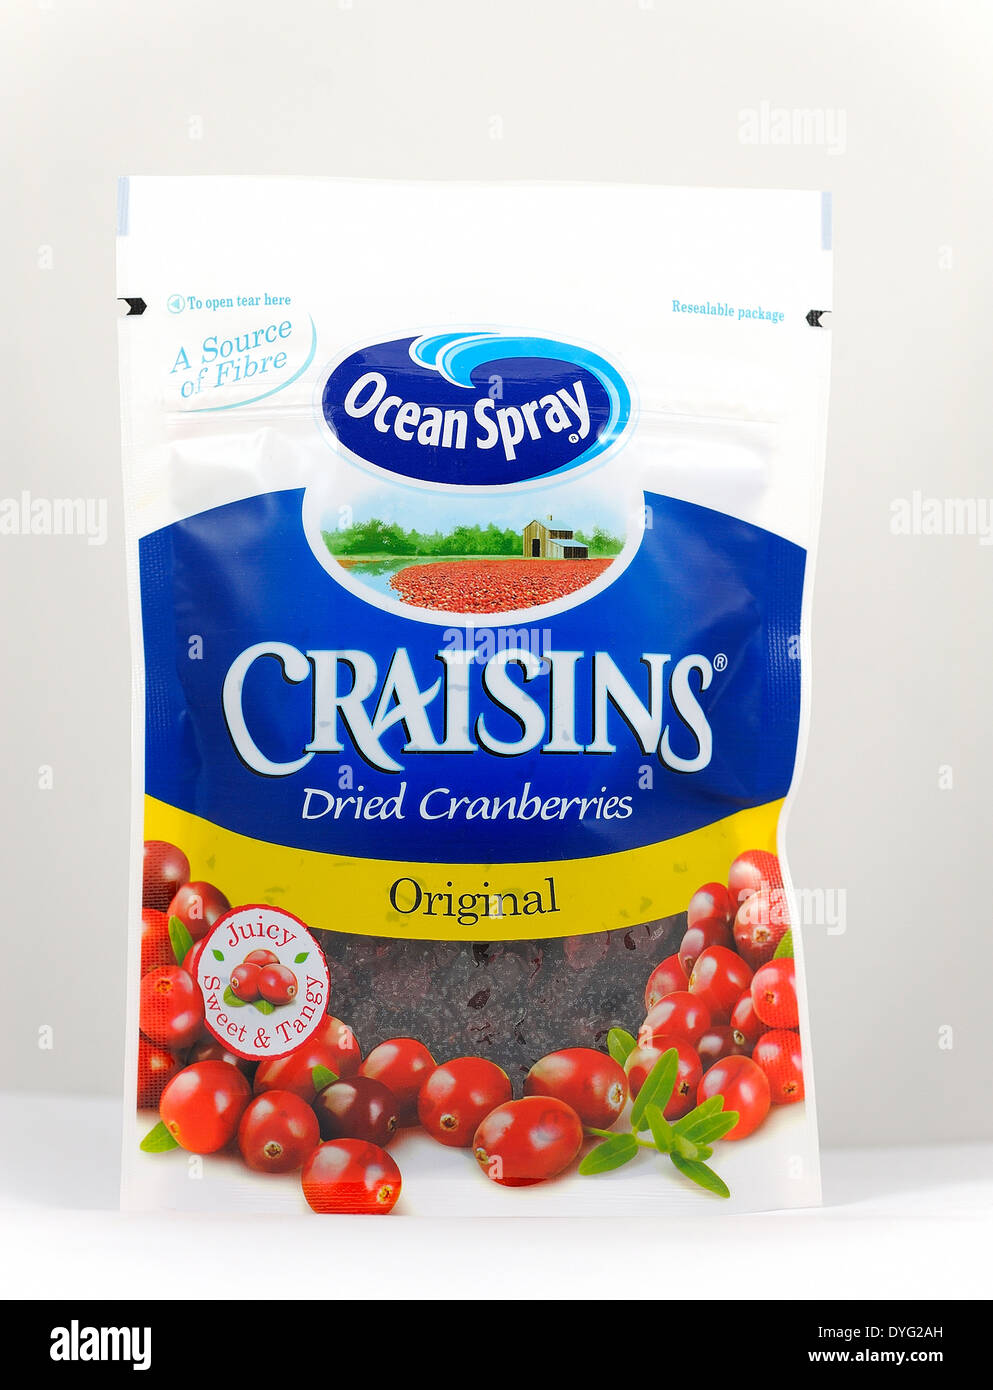 Ocean Spray Craisins dried cranberries Stock Photo